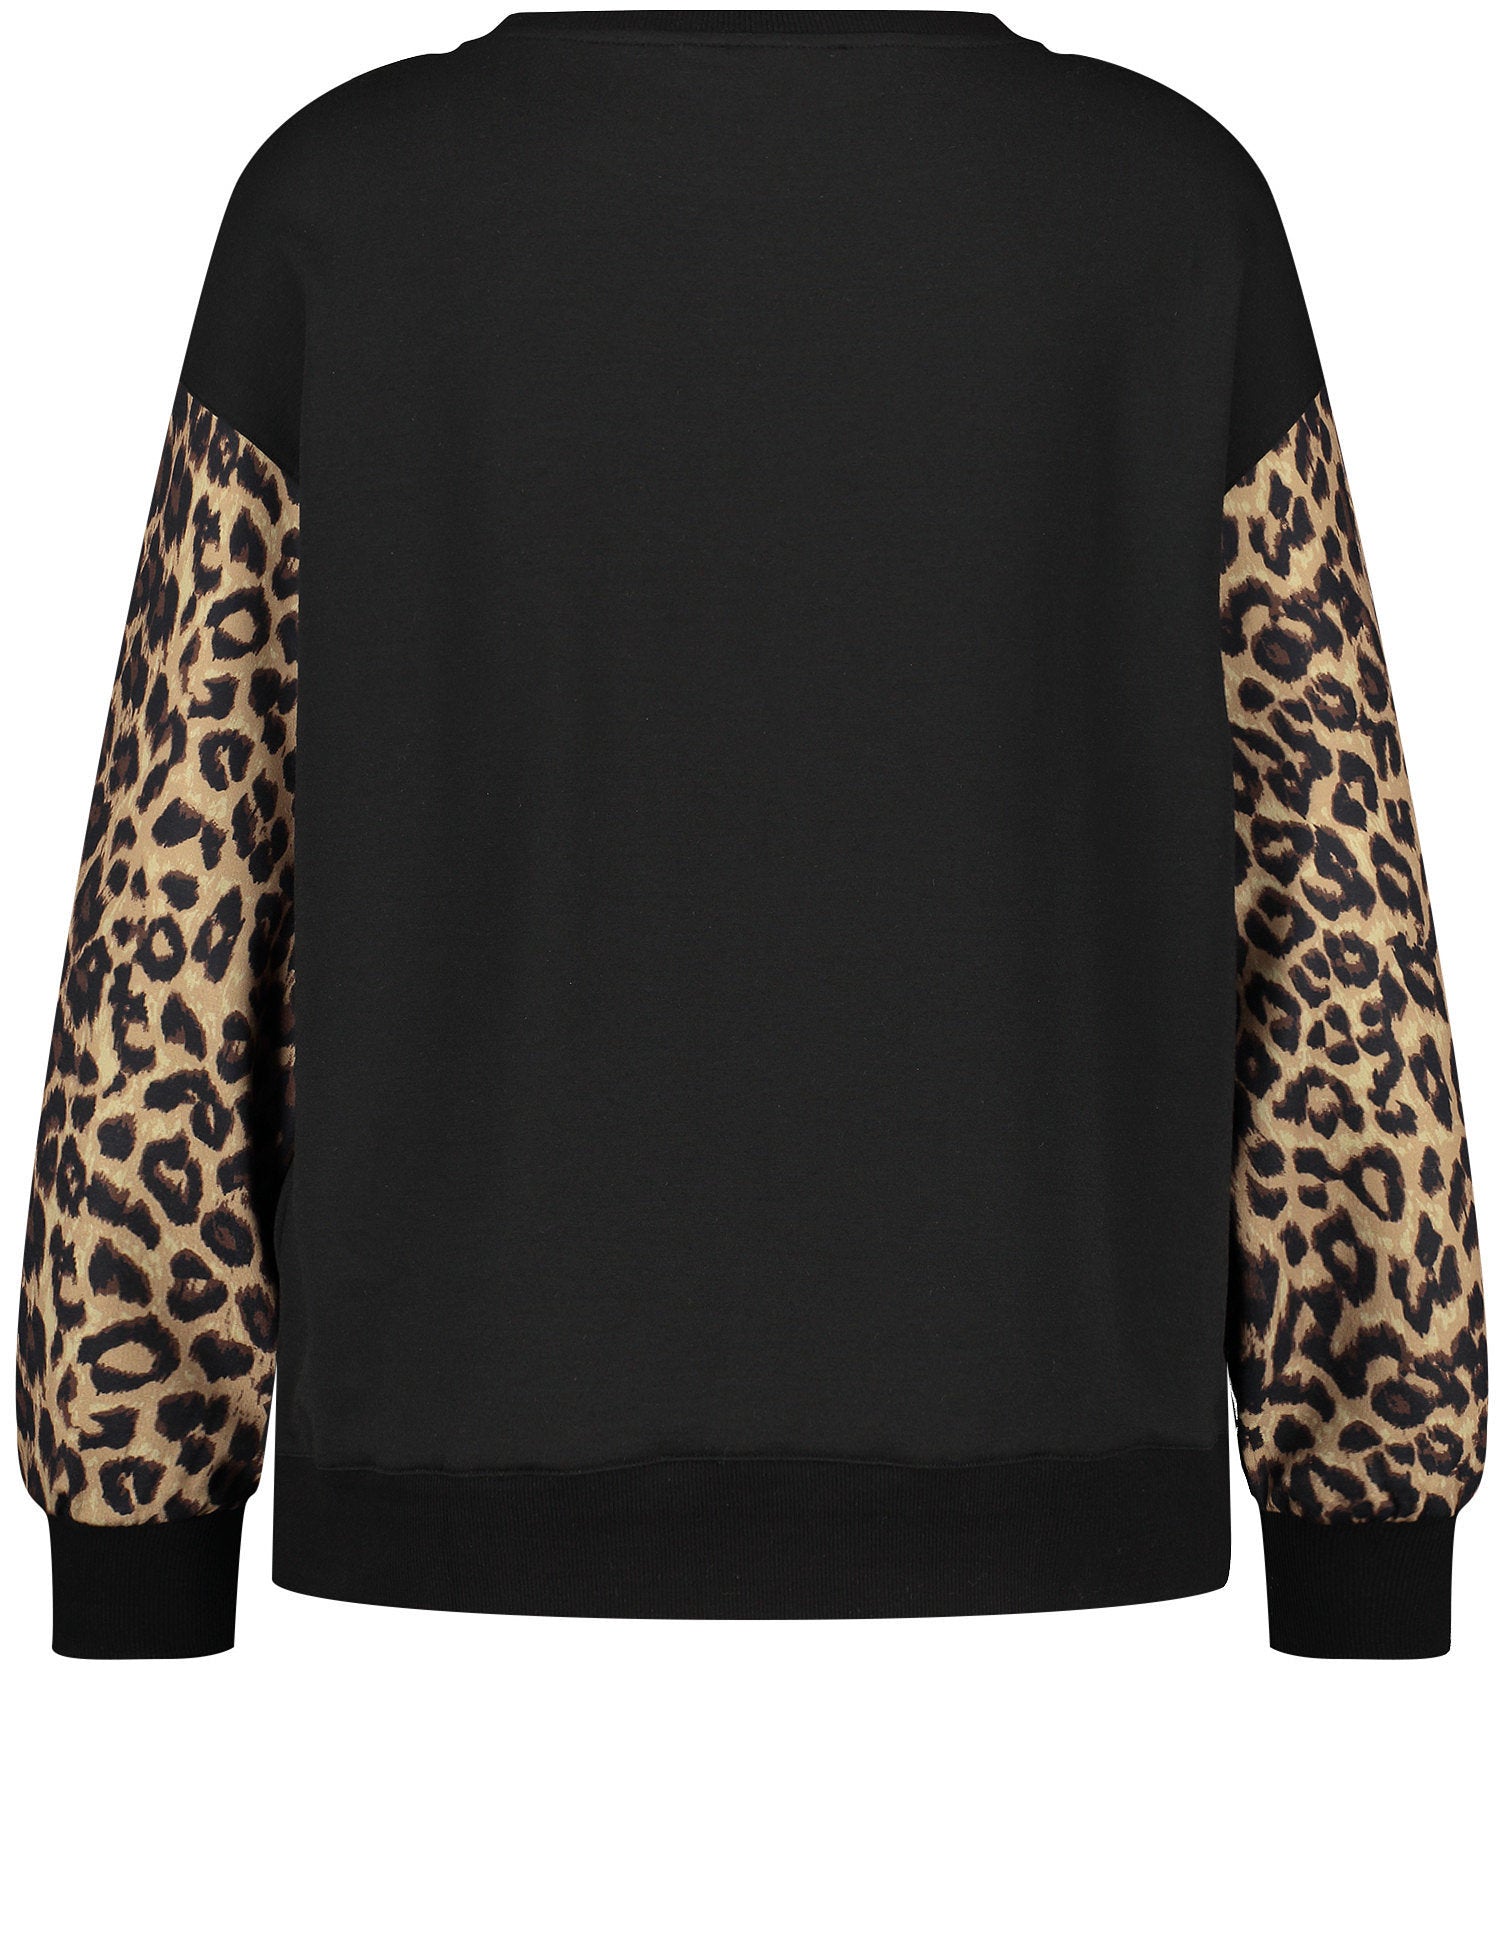 Sweatshirt With Leopard Print Details_371202-26309_1102_02